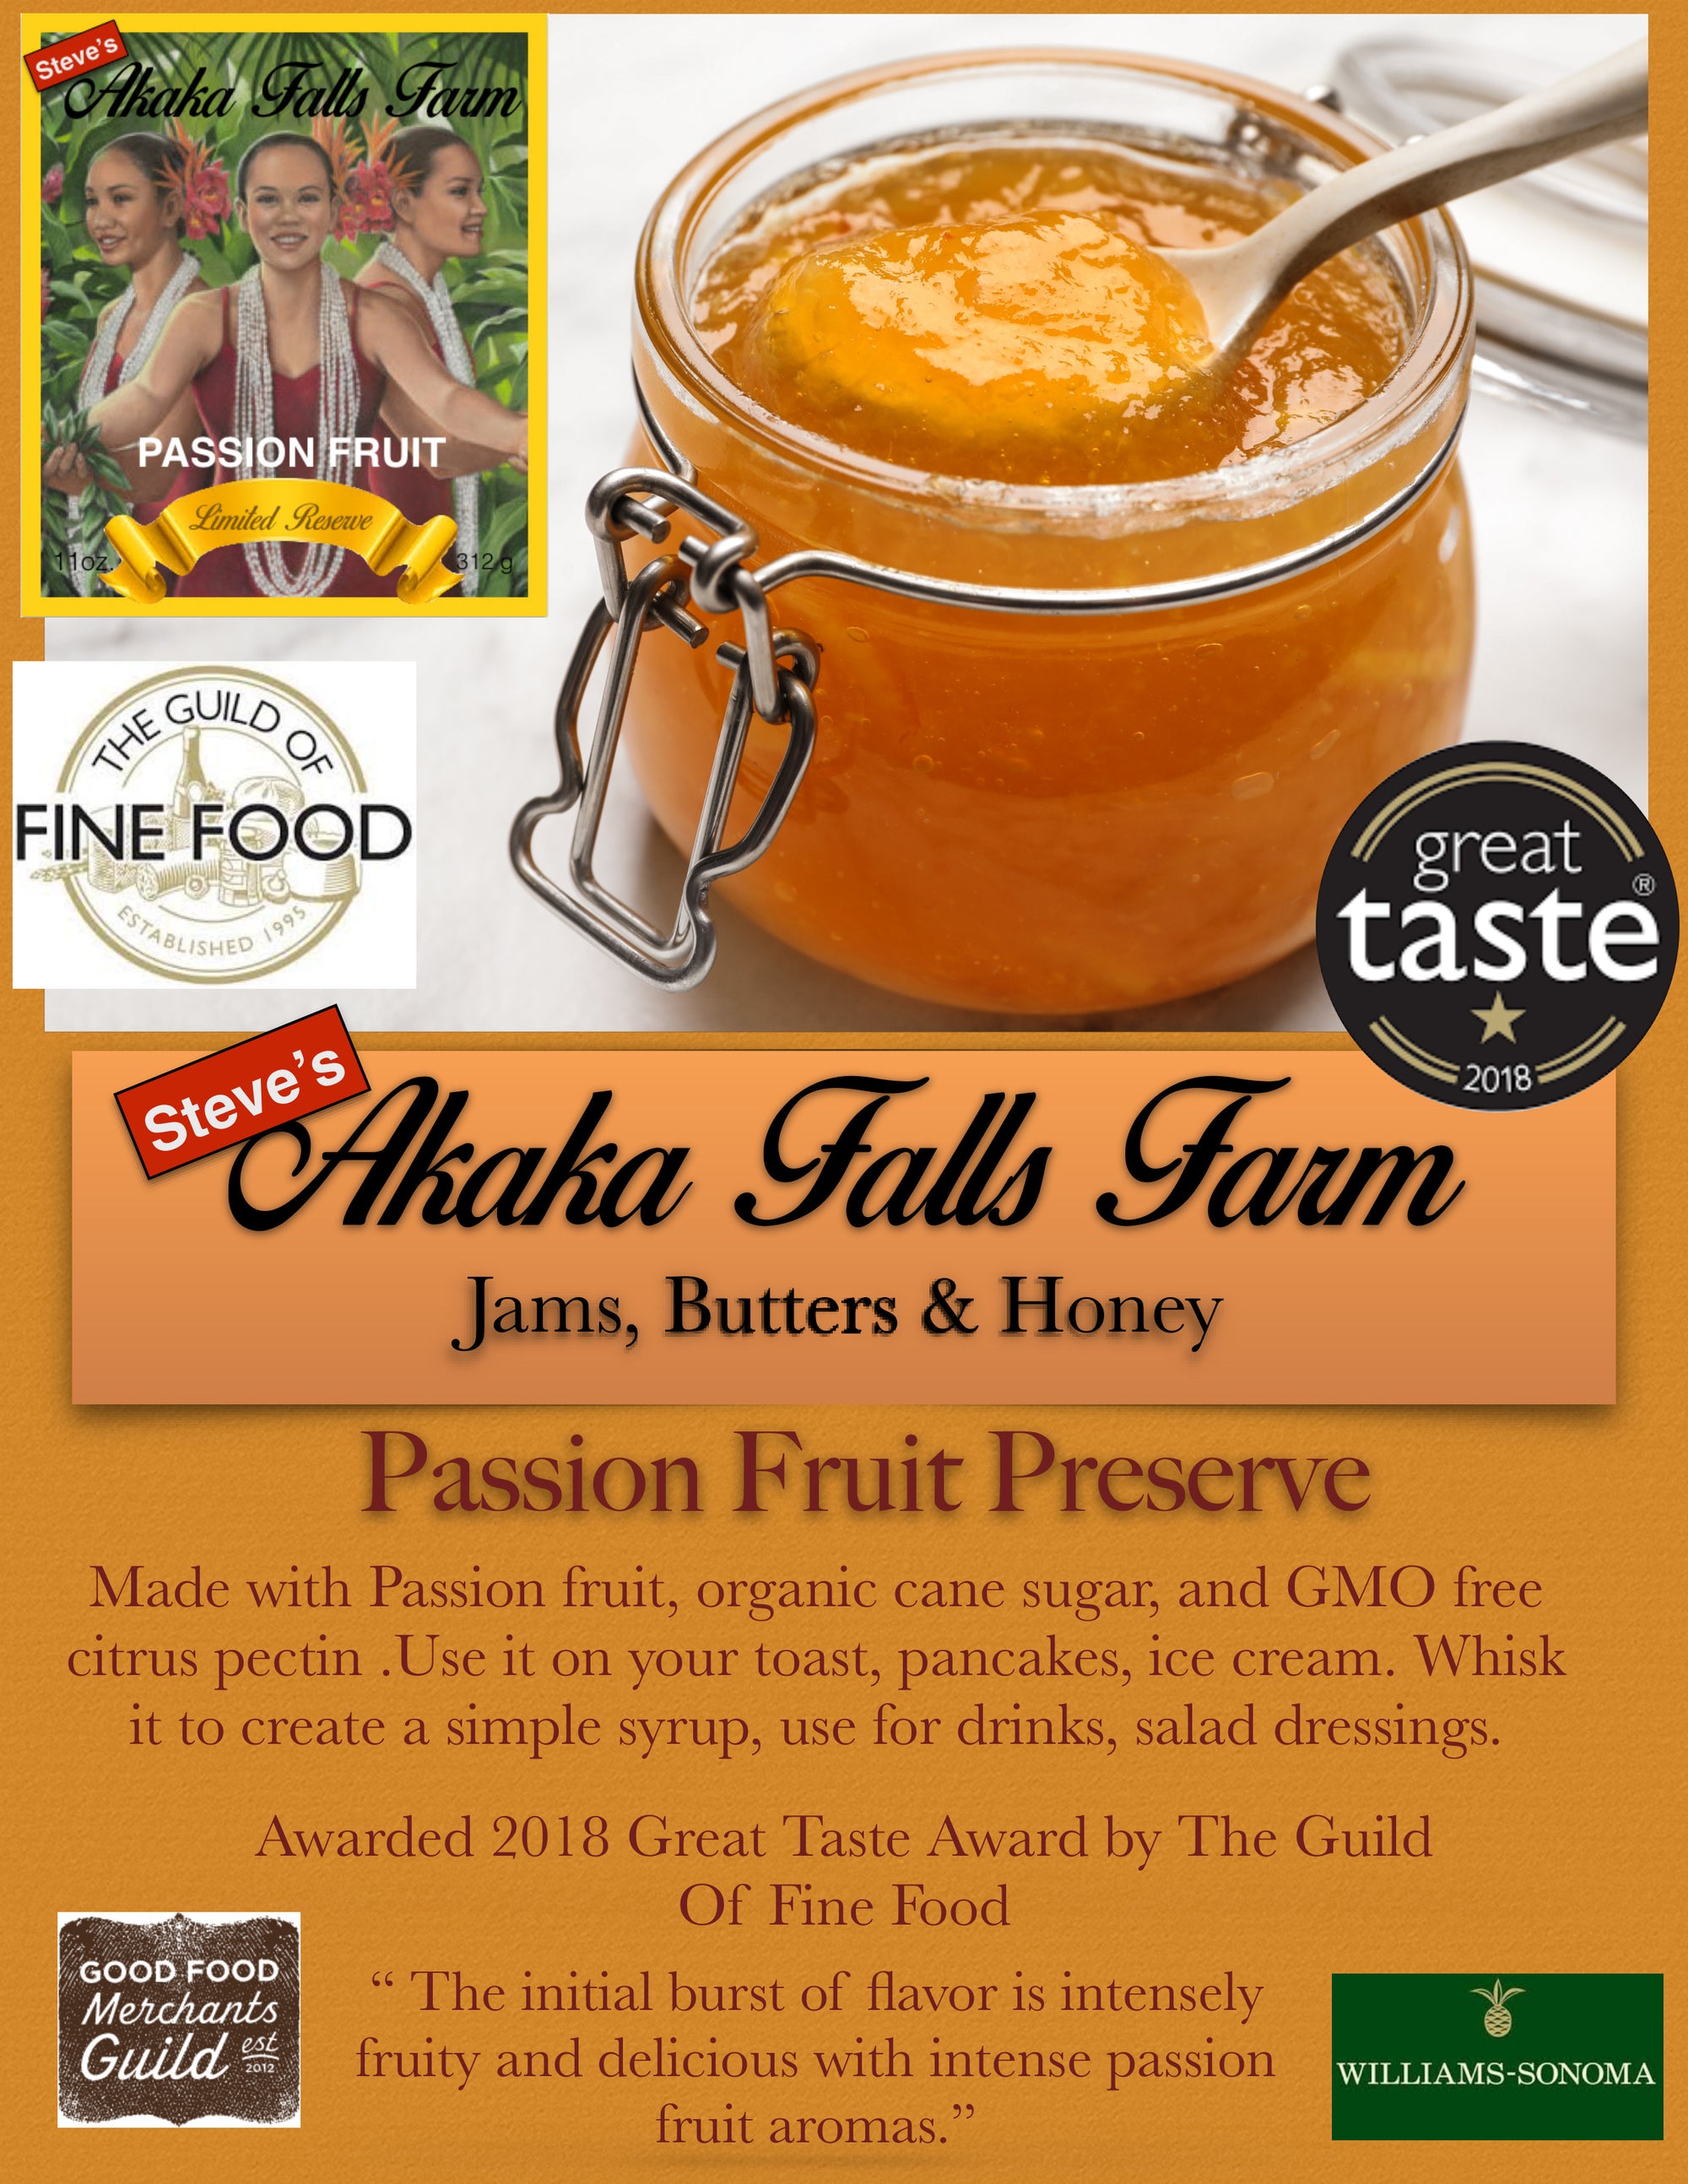 Pop-Up Mākeke - Akaka Falls Farm - Passion Fruit Preserve - Information